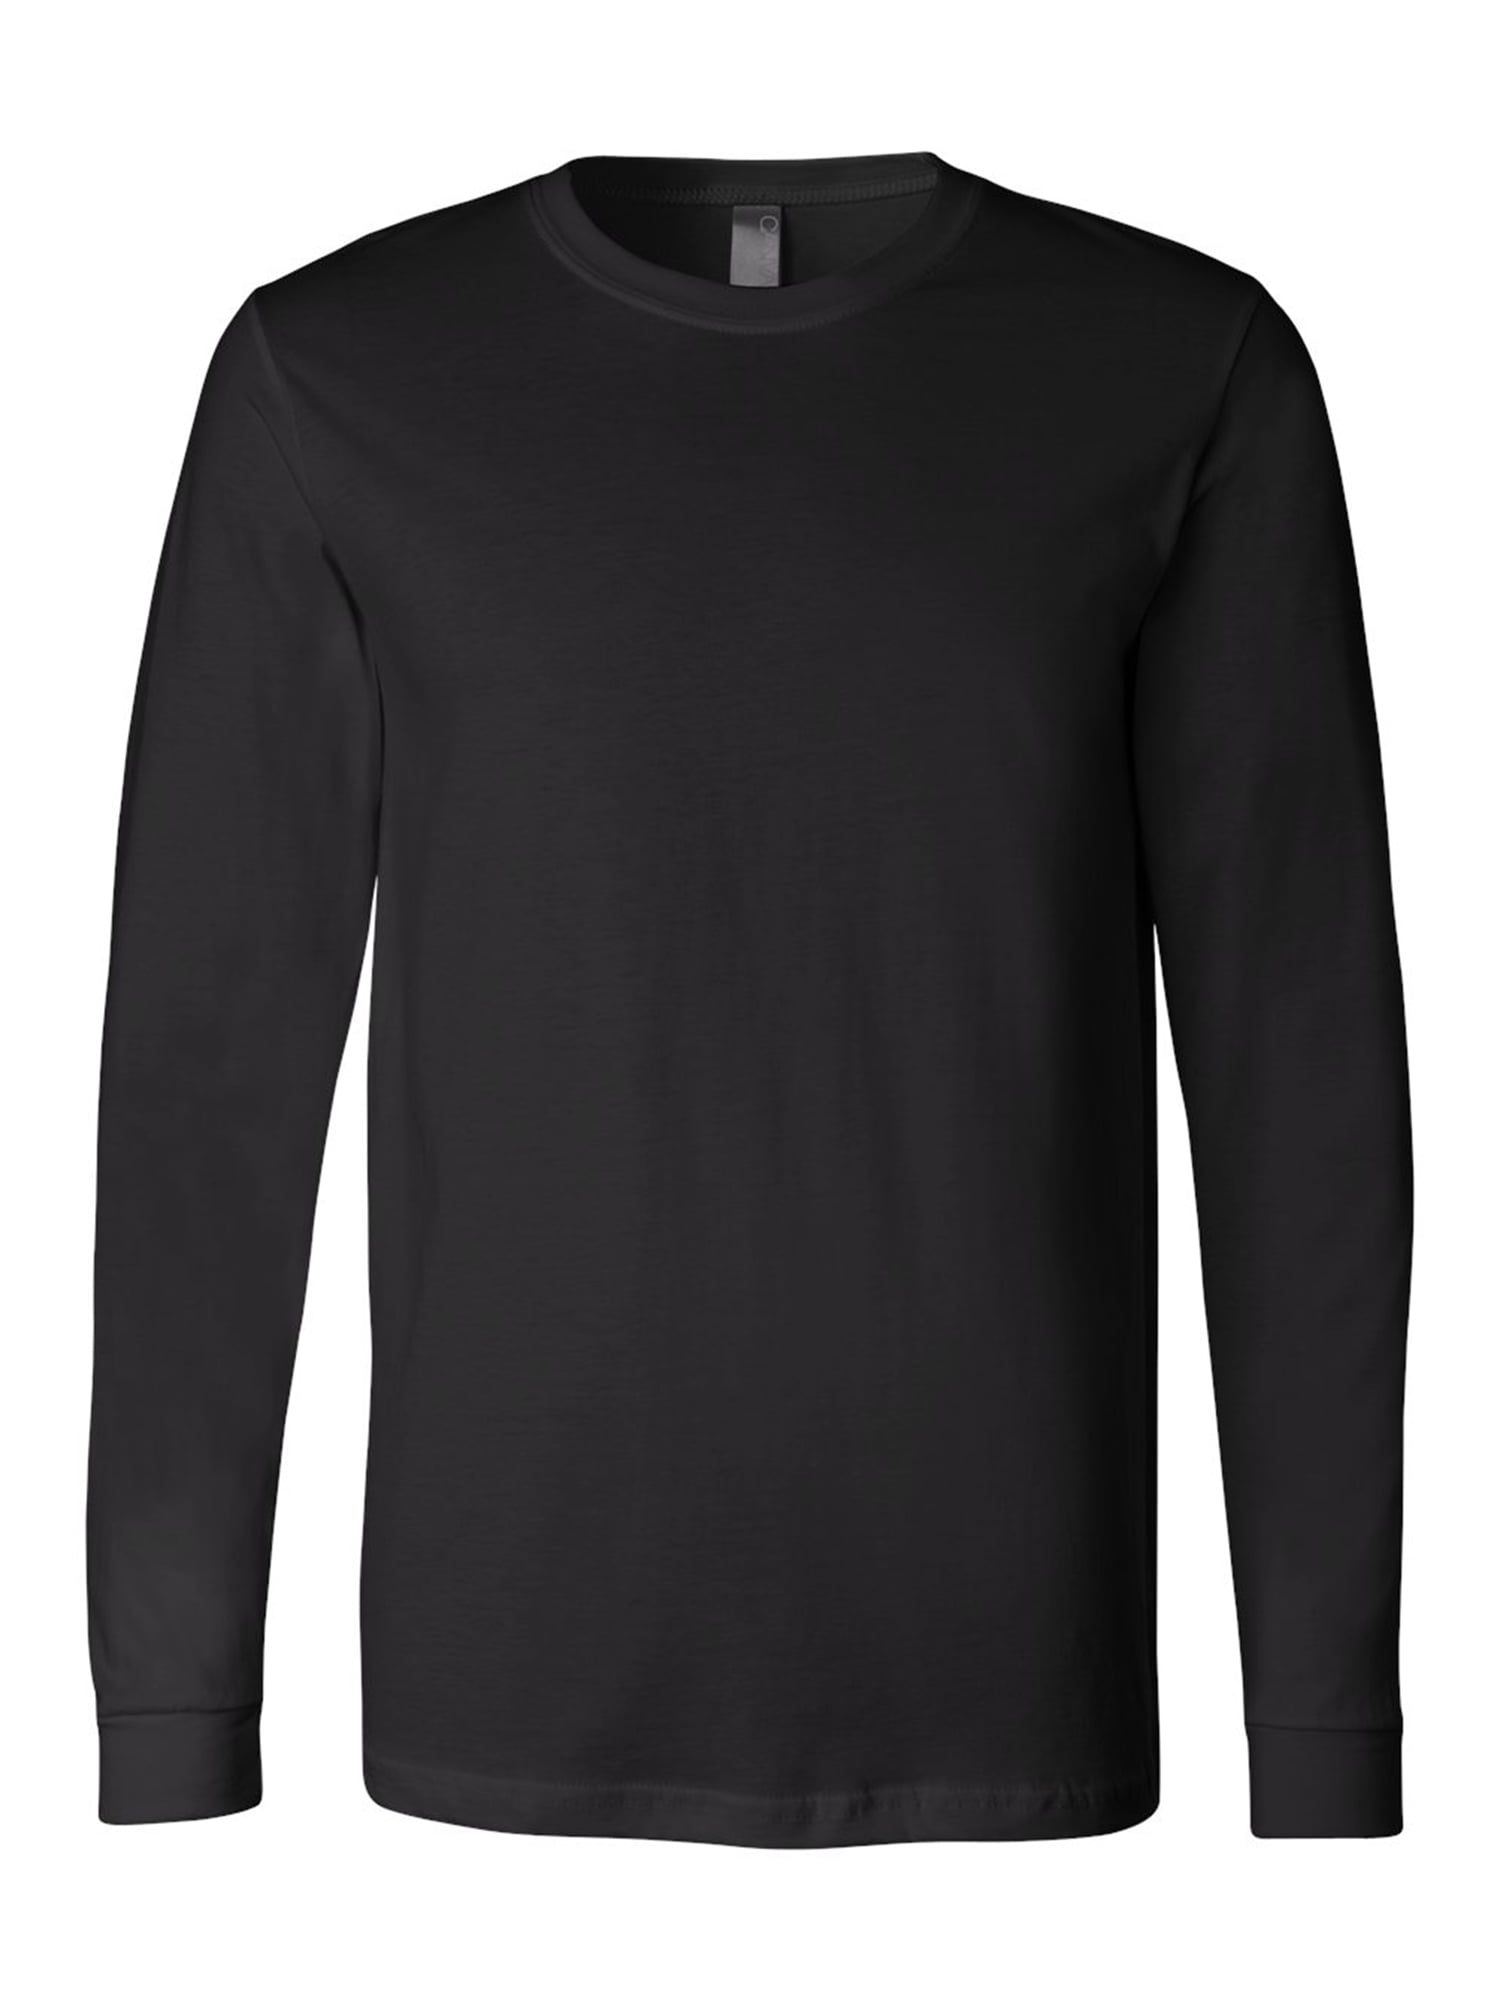 Bella + Canvas - Unisex Long Sleeve Shirt - Men Jersey Tee Black Tops -  Basic Plain Daily Comfortable Women T-Shirt